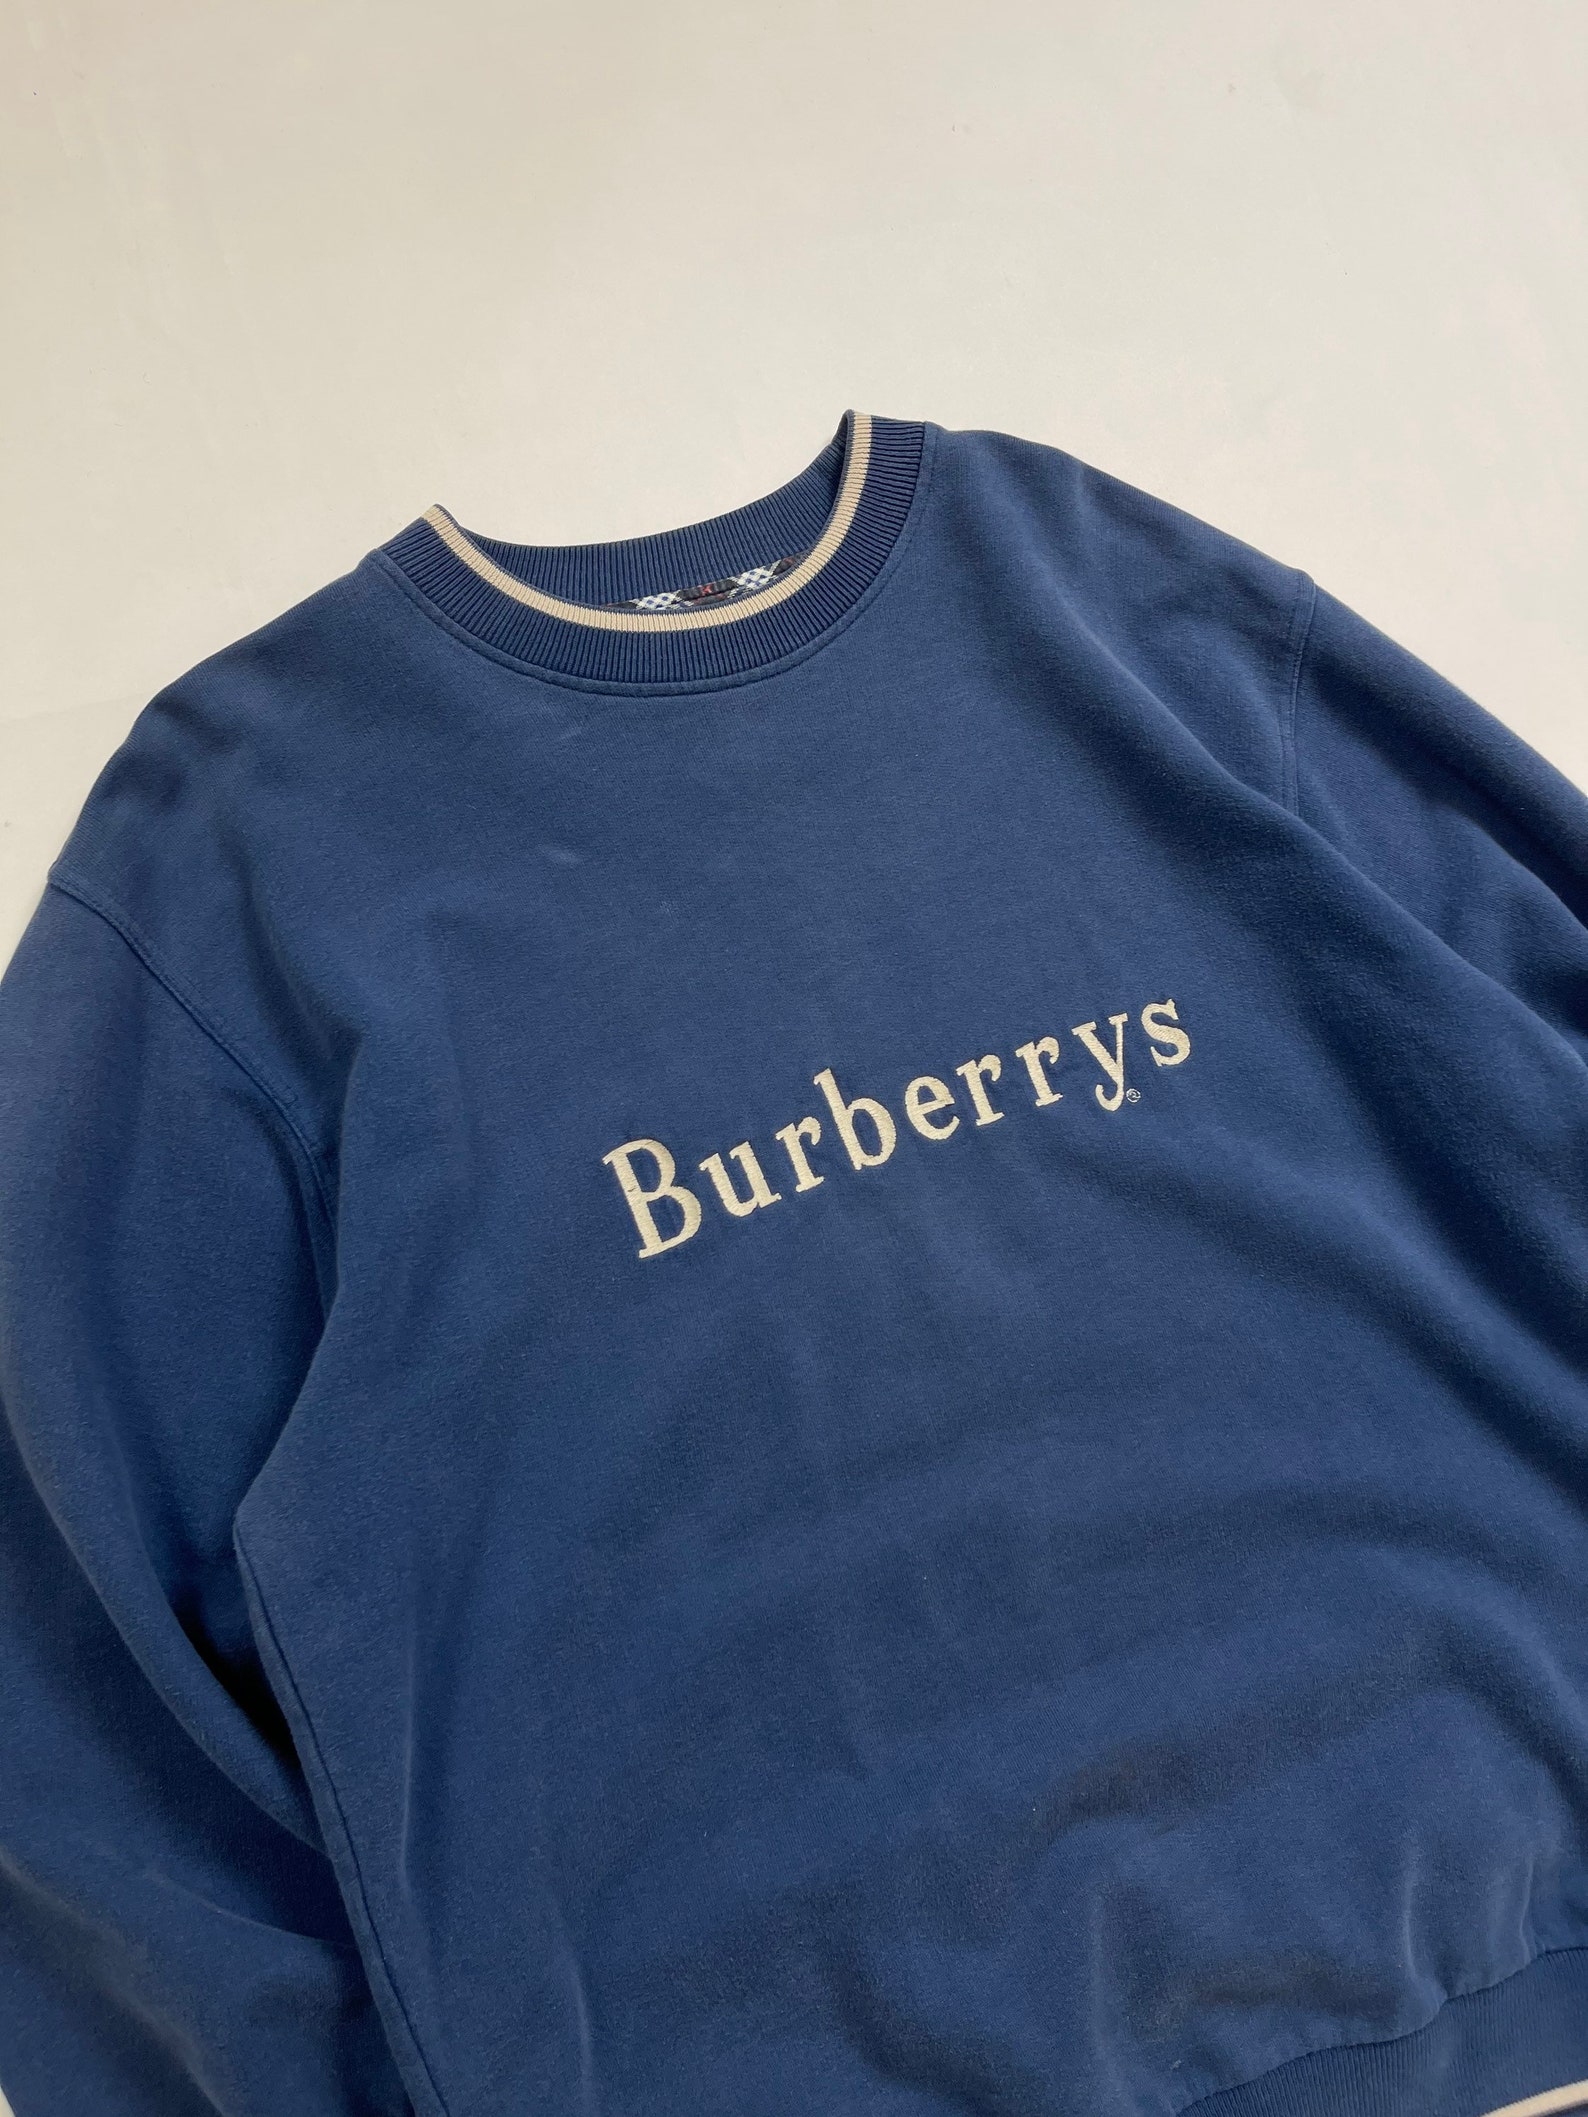 Burberrys vintage crewneck sweatshirt 90s very rare vintage | Etsy